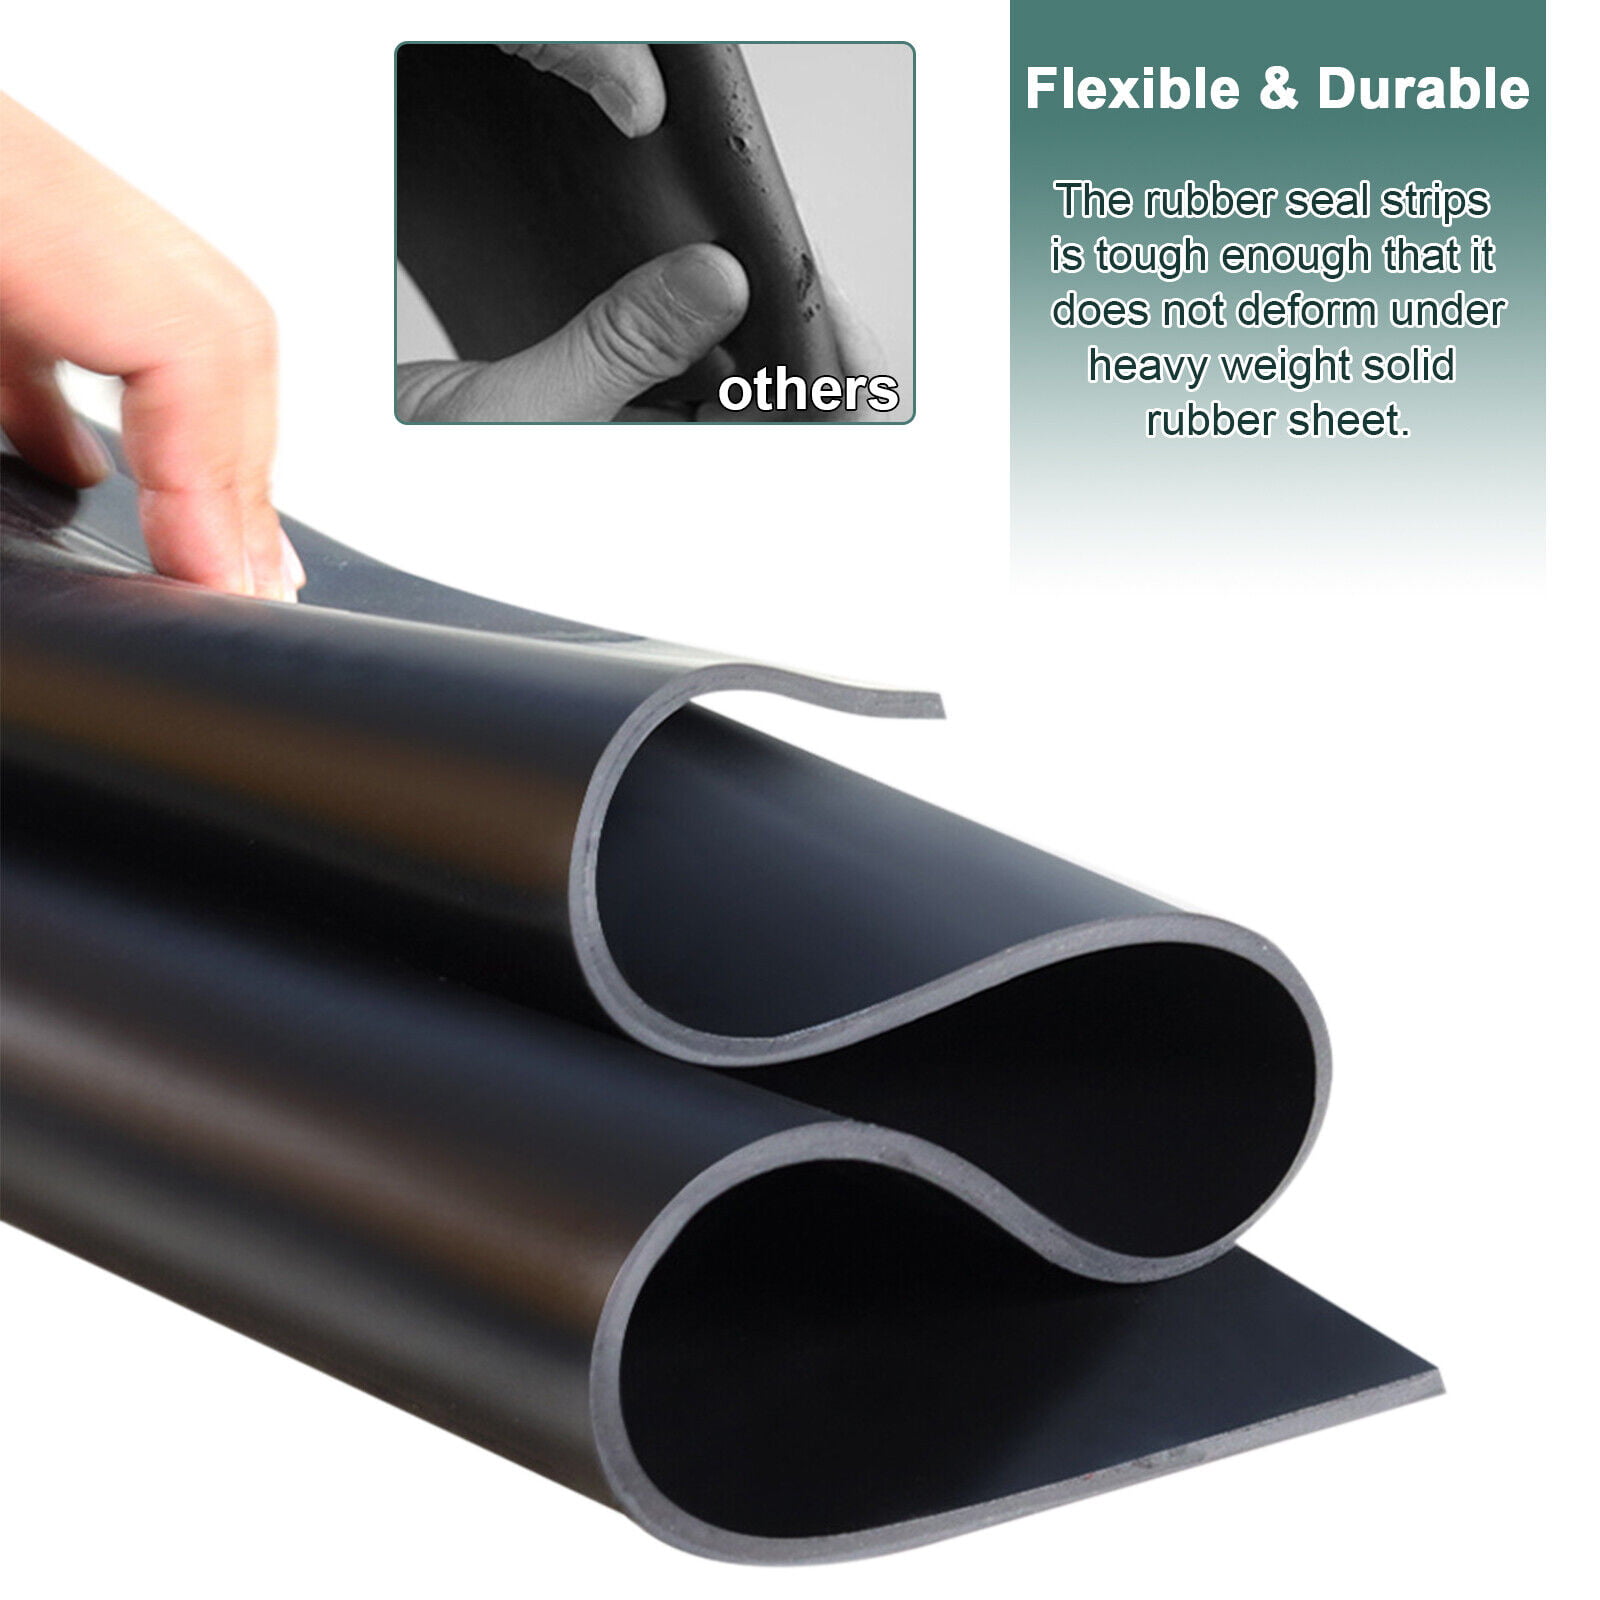 Neoprene Rubber Sheet - 1/8 Inch Thick x 4 Inch Wide x 10 Feet Long  Neoprene Rubber Strips Rolls for DIY Gaskets, Pads, Seals, Crafts,  Flooring